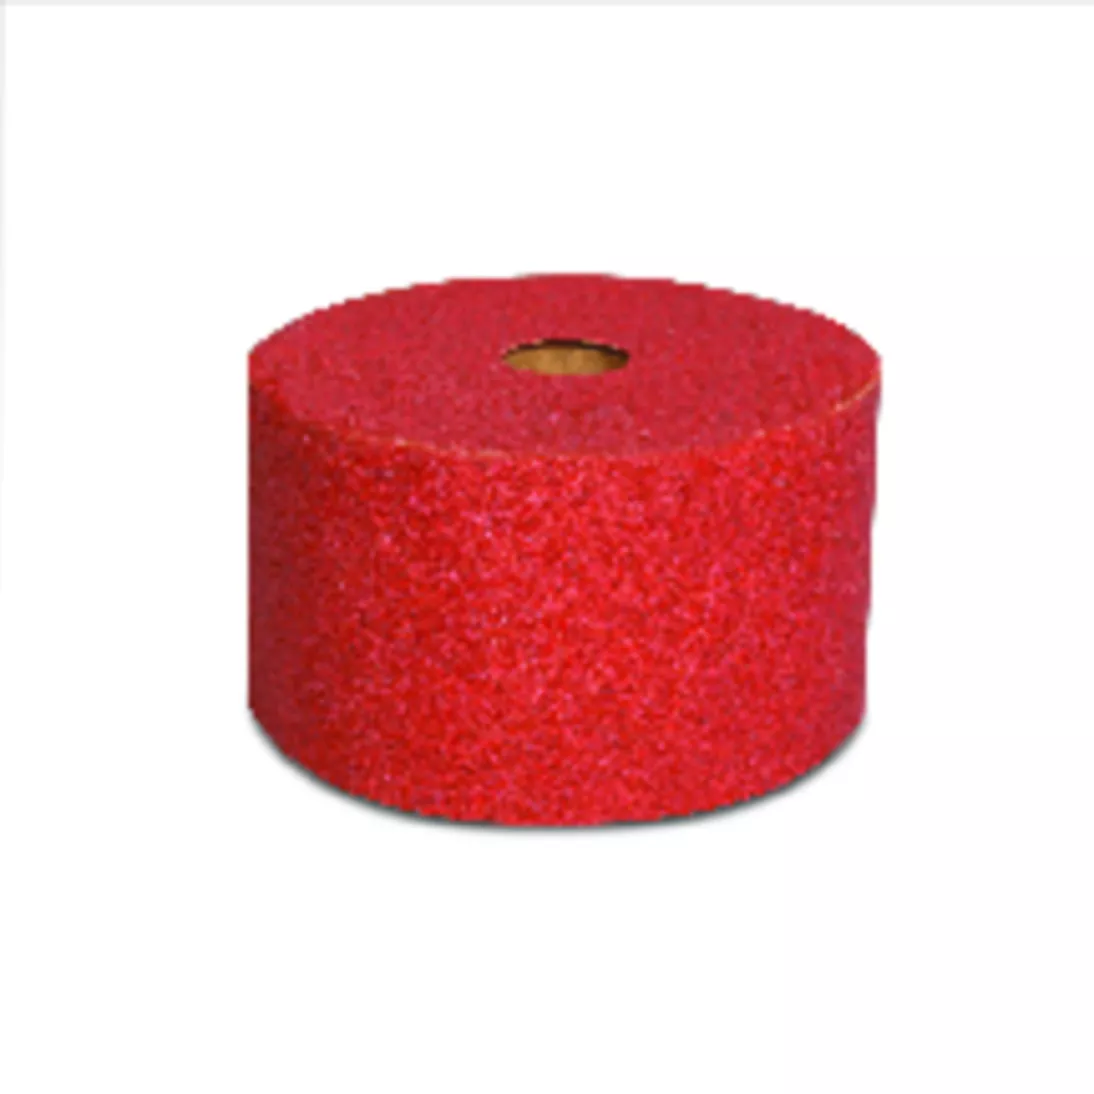 3M™ Red Abrasive Stikit™ Sheet Roll, 01683, P240, 2-3/4 in x 25 yd, 6
rolls per case